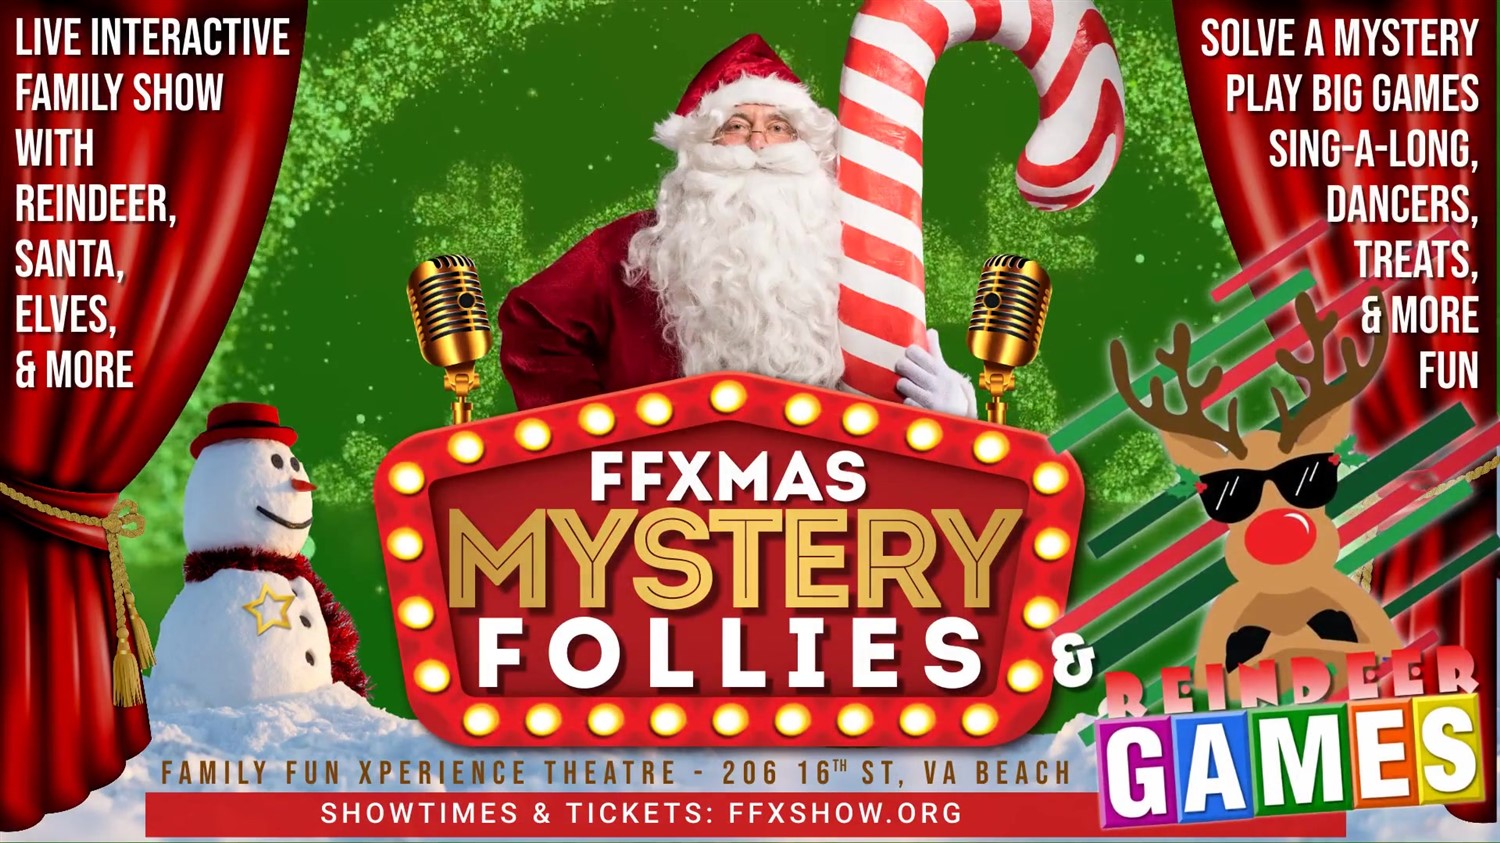 FFXmas MYSTERY FOLLIES Plus Bonus Reindeer Games on dic. 23, 19:00@FFX Theatre - Elegir asientoCompra entradas y obtén información enFamily Fun Xperience tickets.ffxshow.org